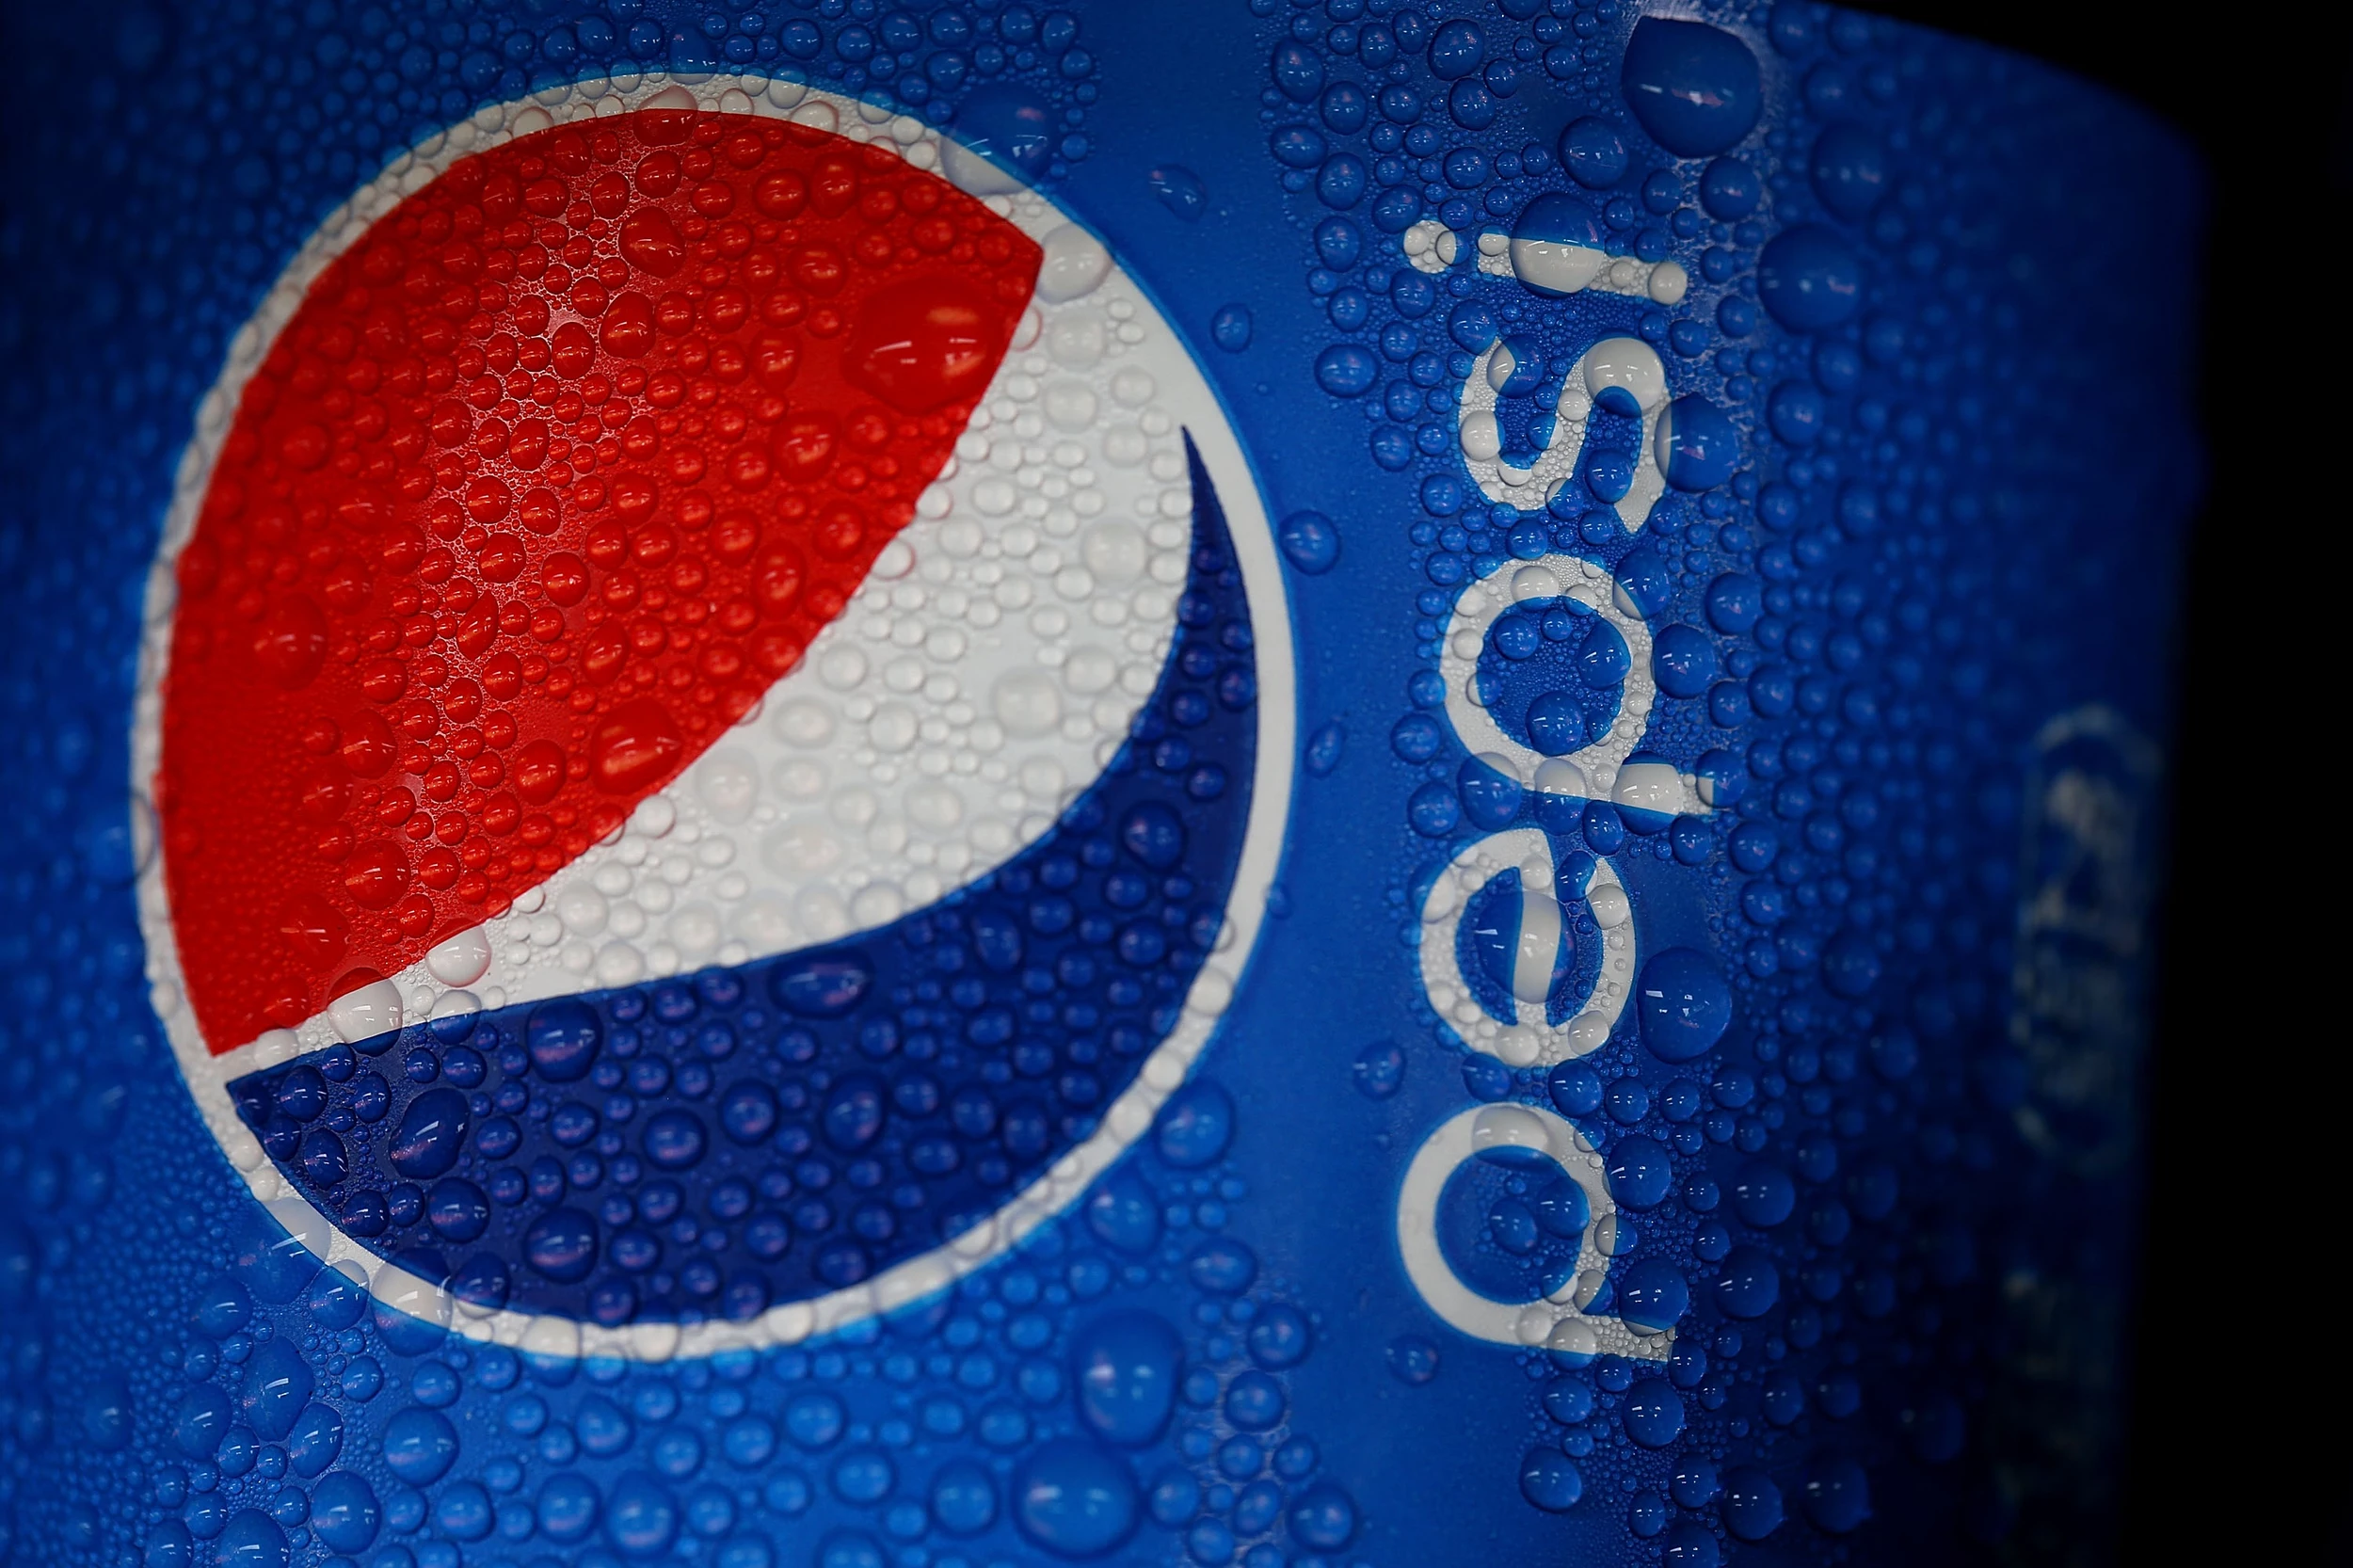 Pepsi Bringing Back Pepsi Blue After 20 Years image